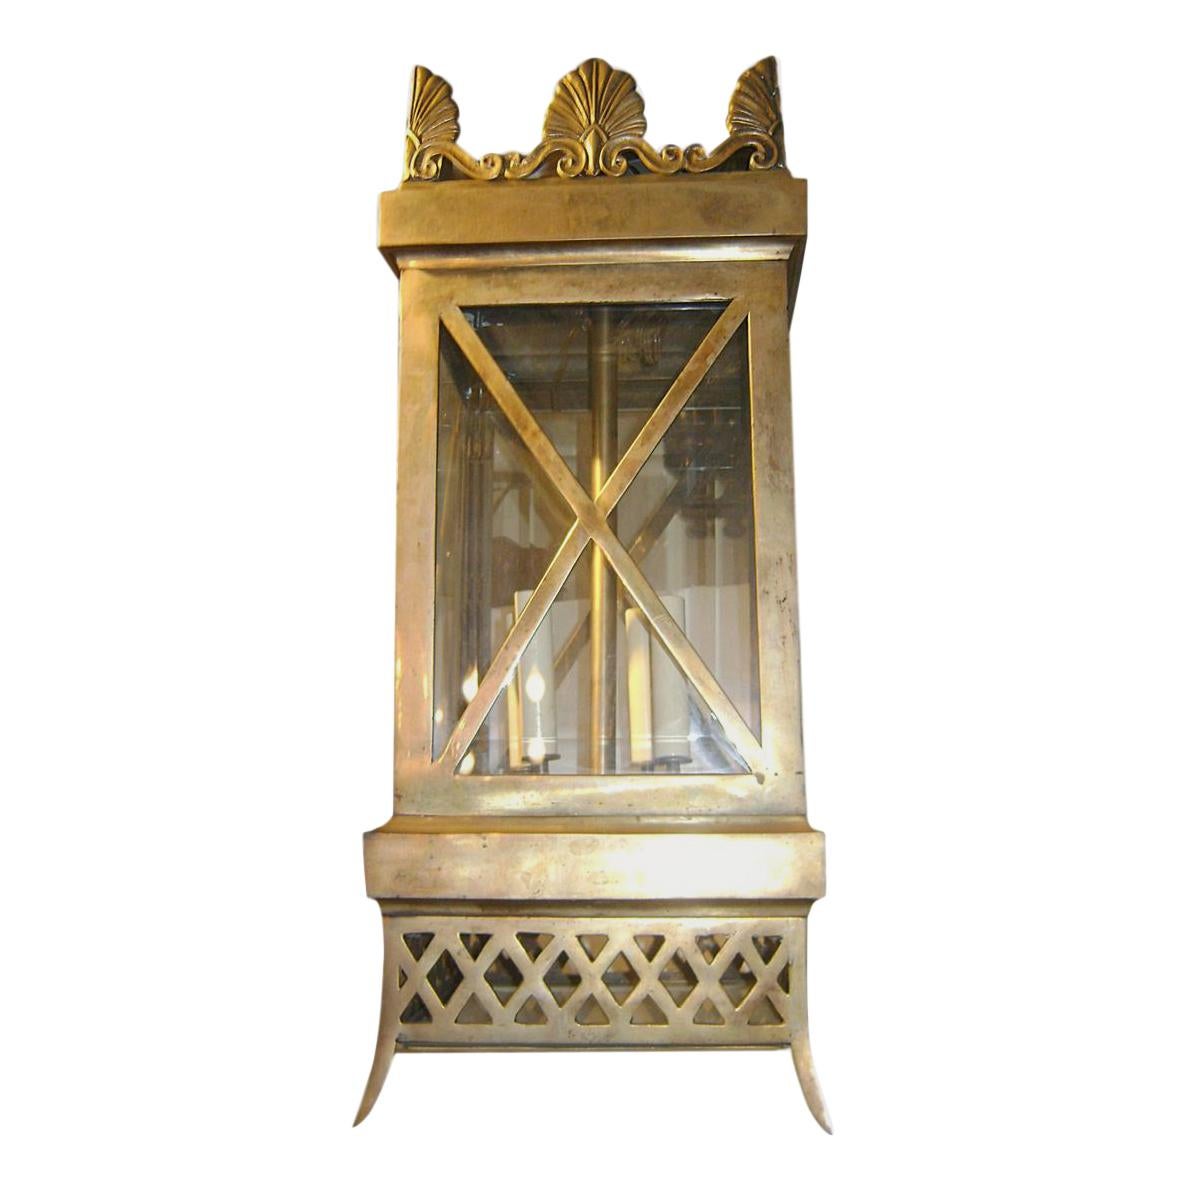 A Large Bronze English Lantern For Sale